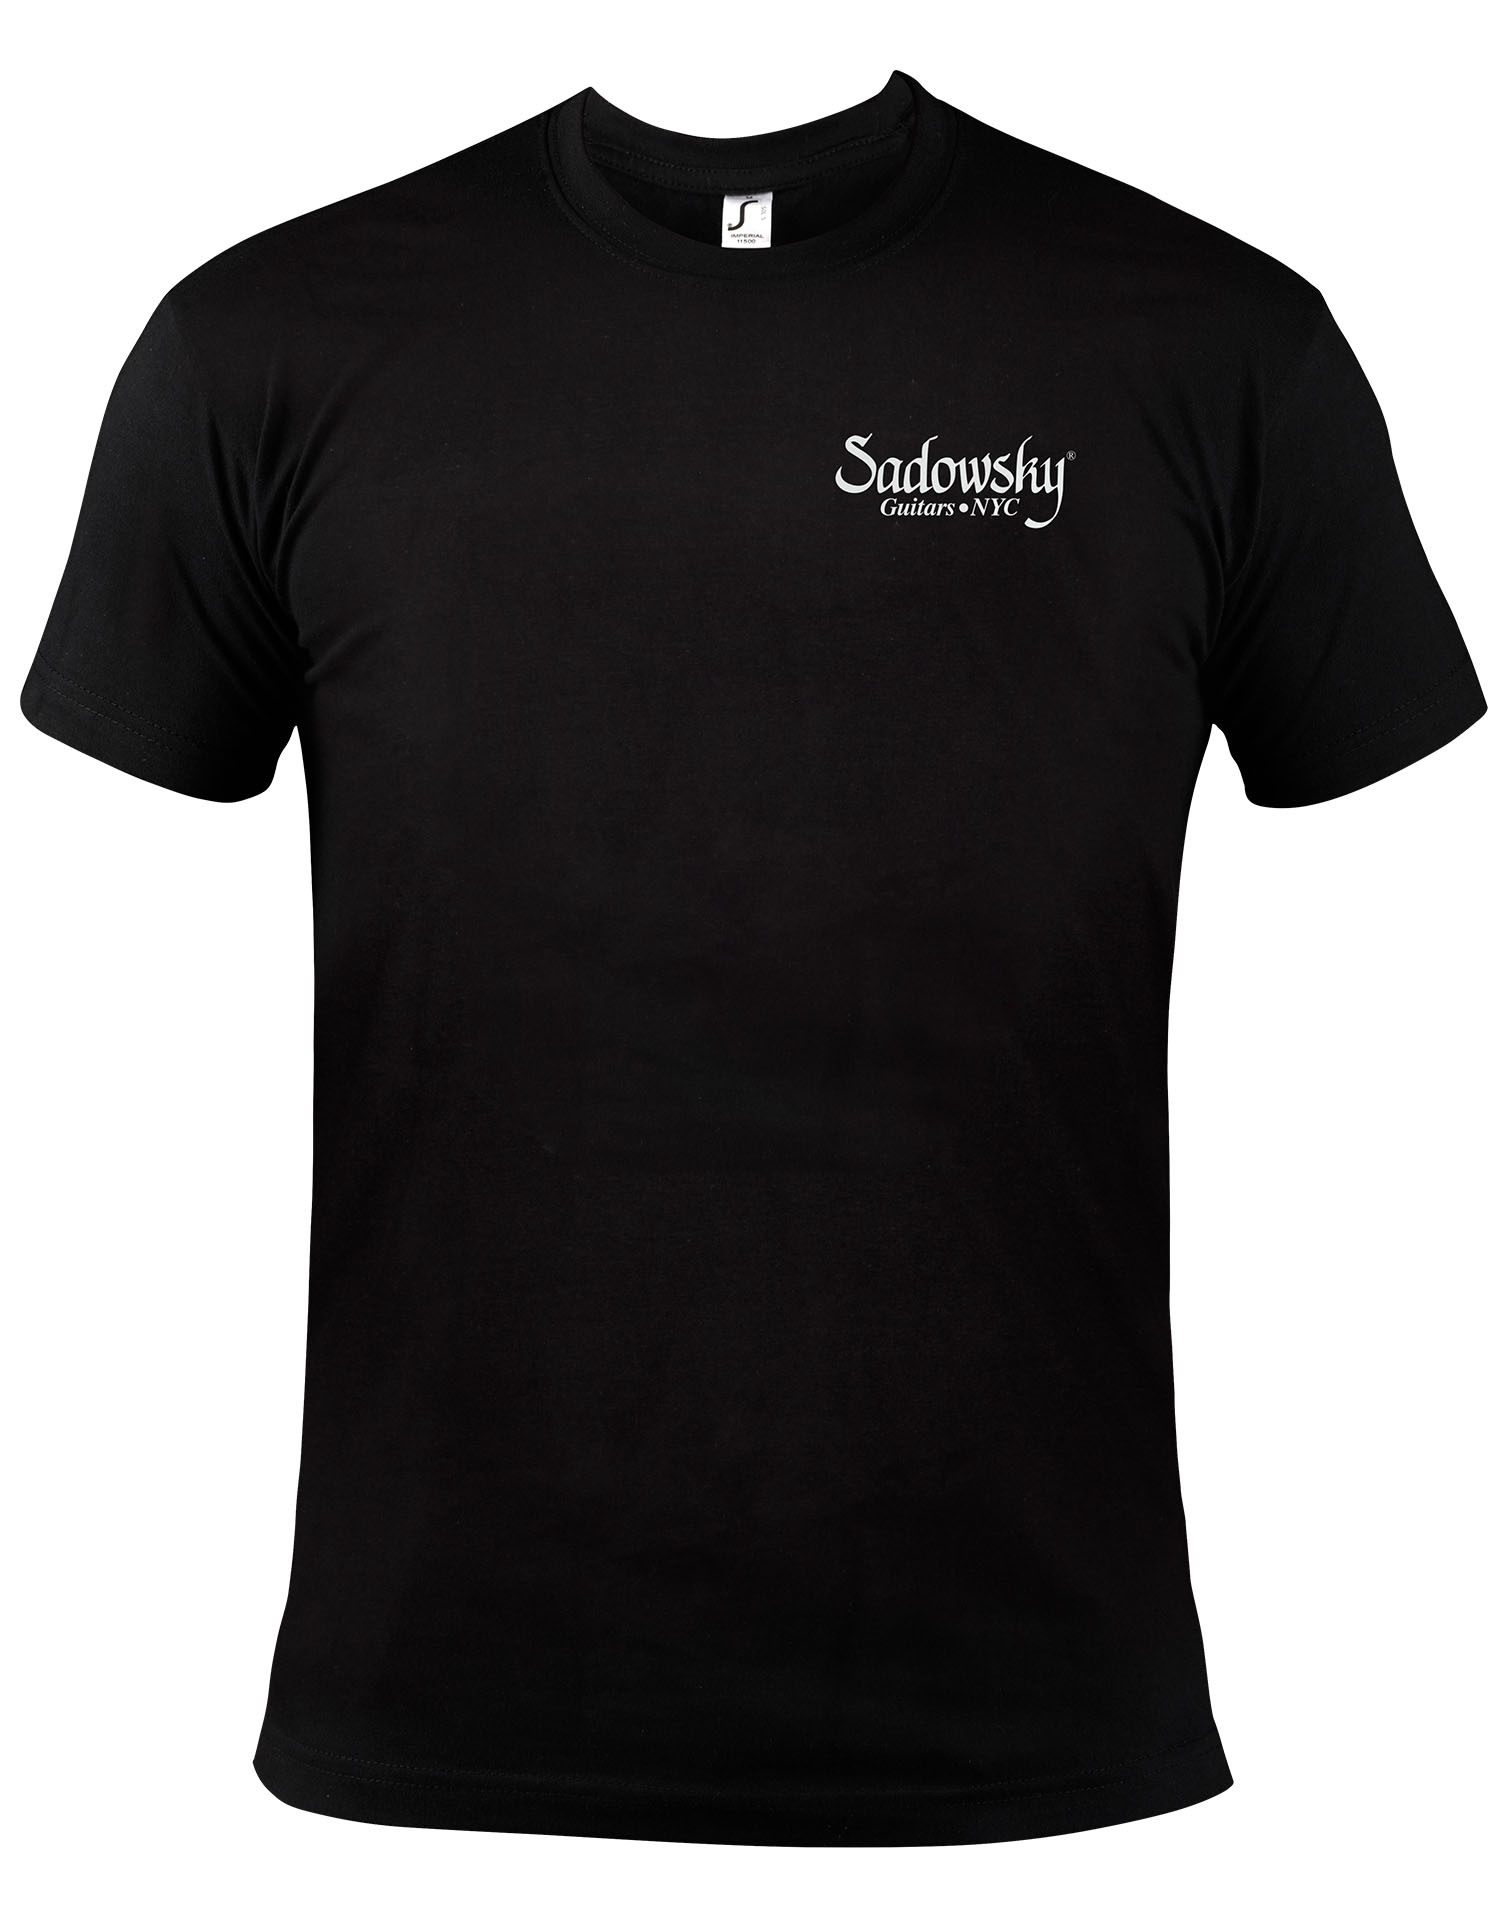 Sadowsky Promo - Logo T-Shirt, Black with White Print - Size S